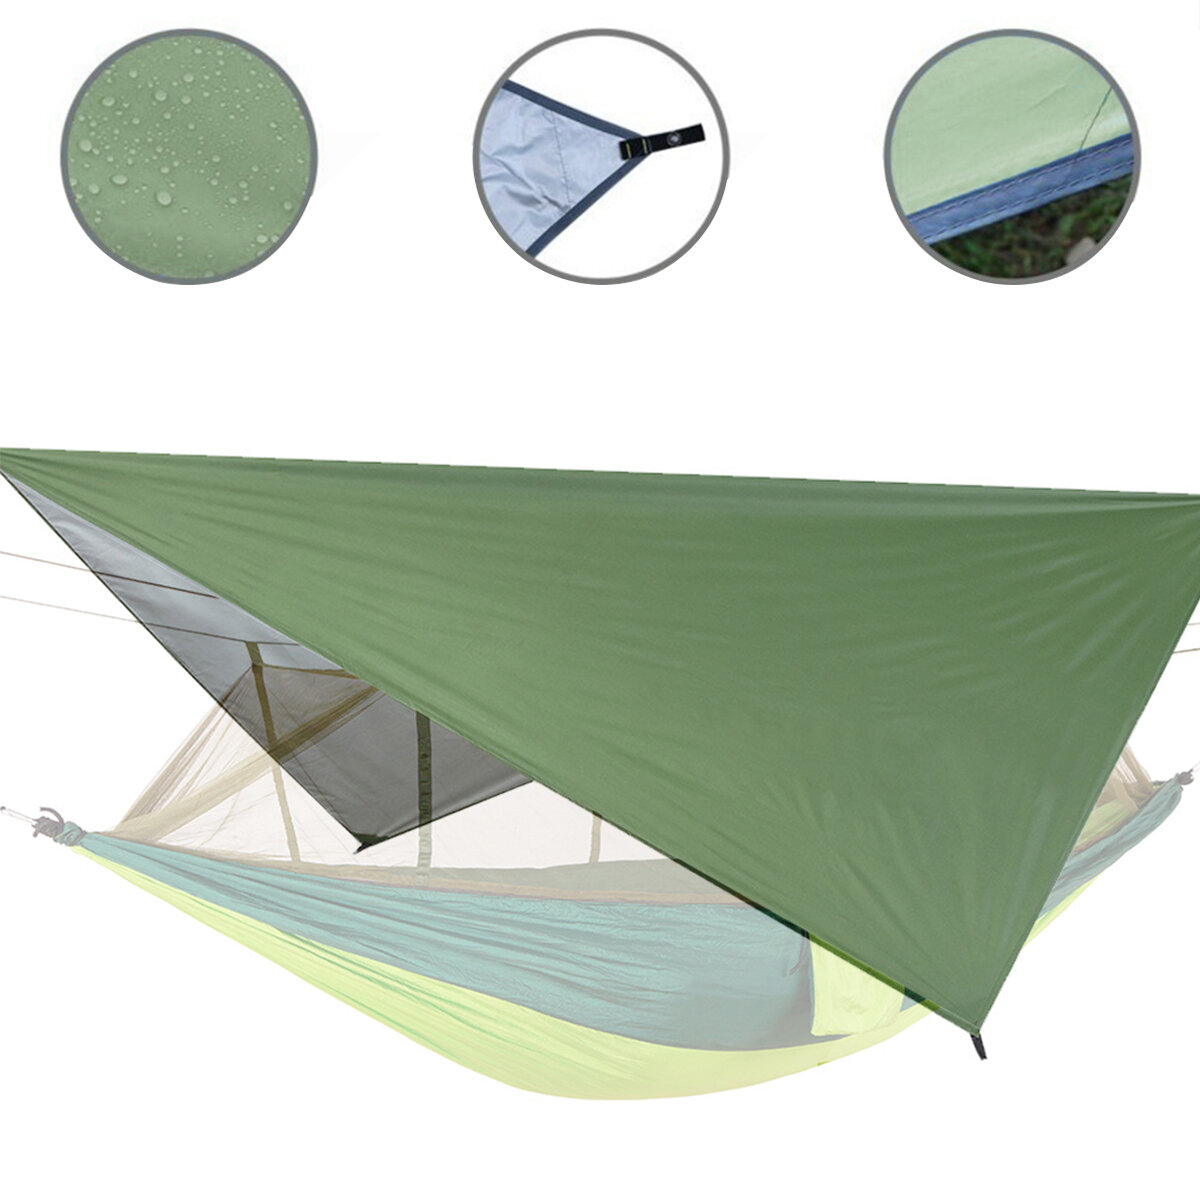 IPRee® 122x122 Zoll Outdoor-Patio-Markise wasserdicht Zelt Camping Picknick multifunktionale Sonnenschutzabdeckung